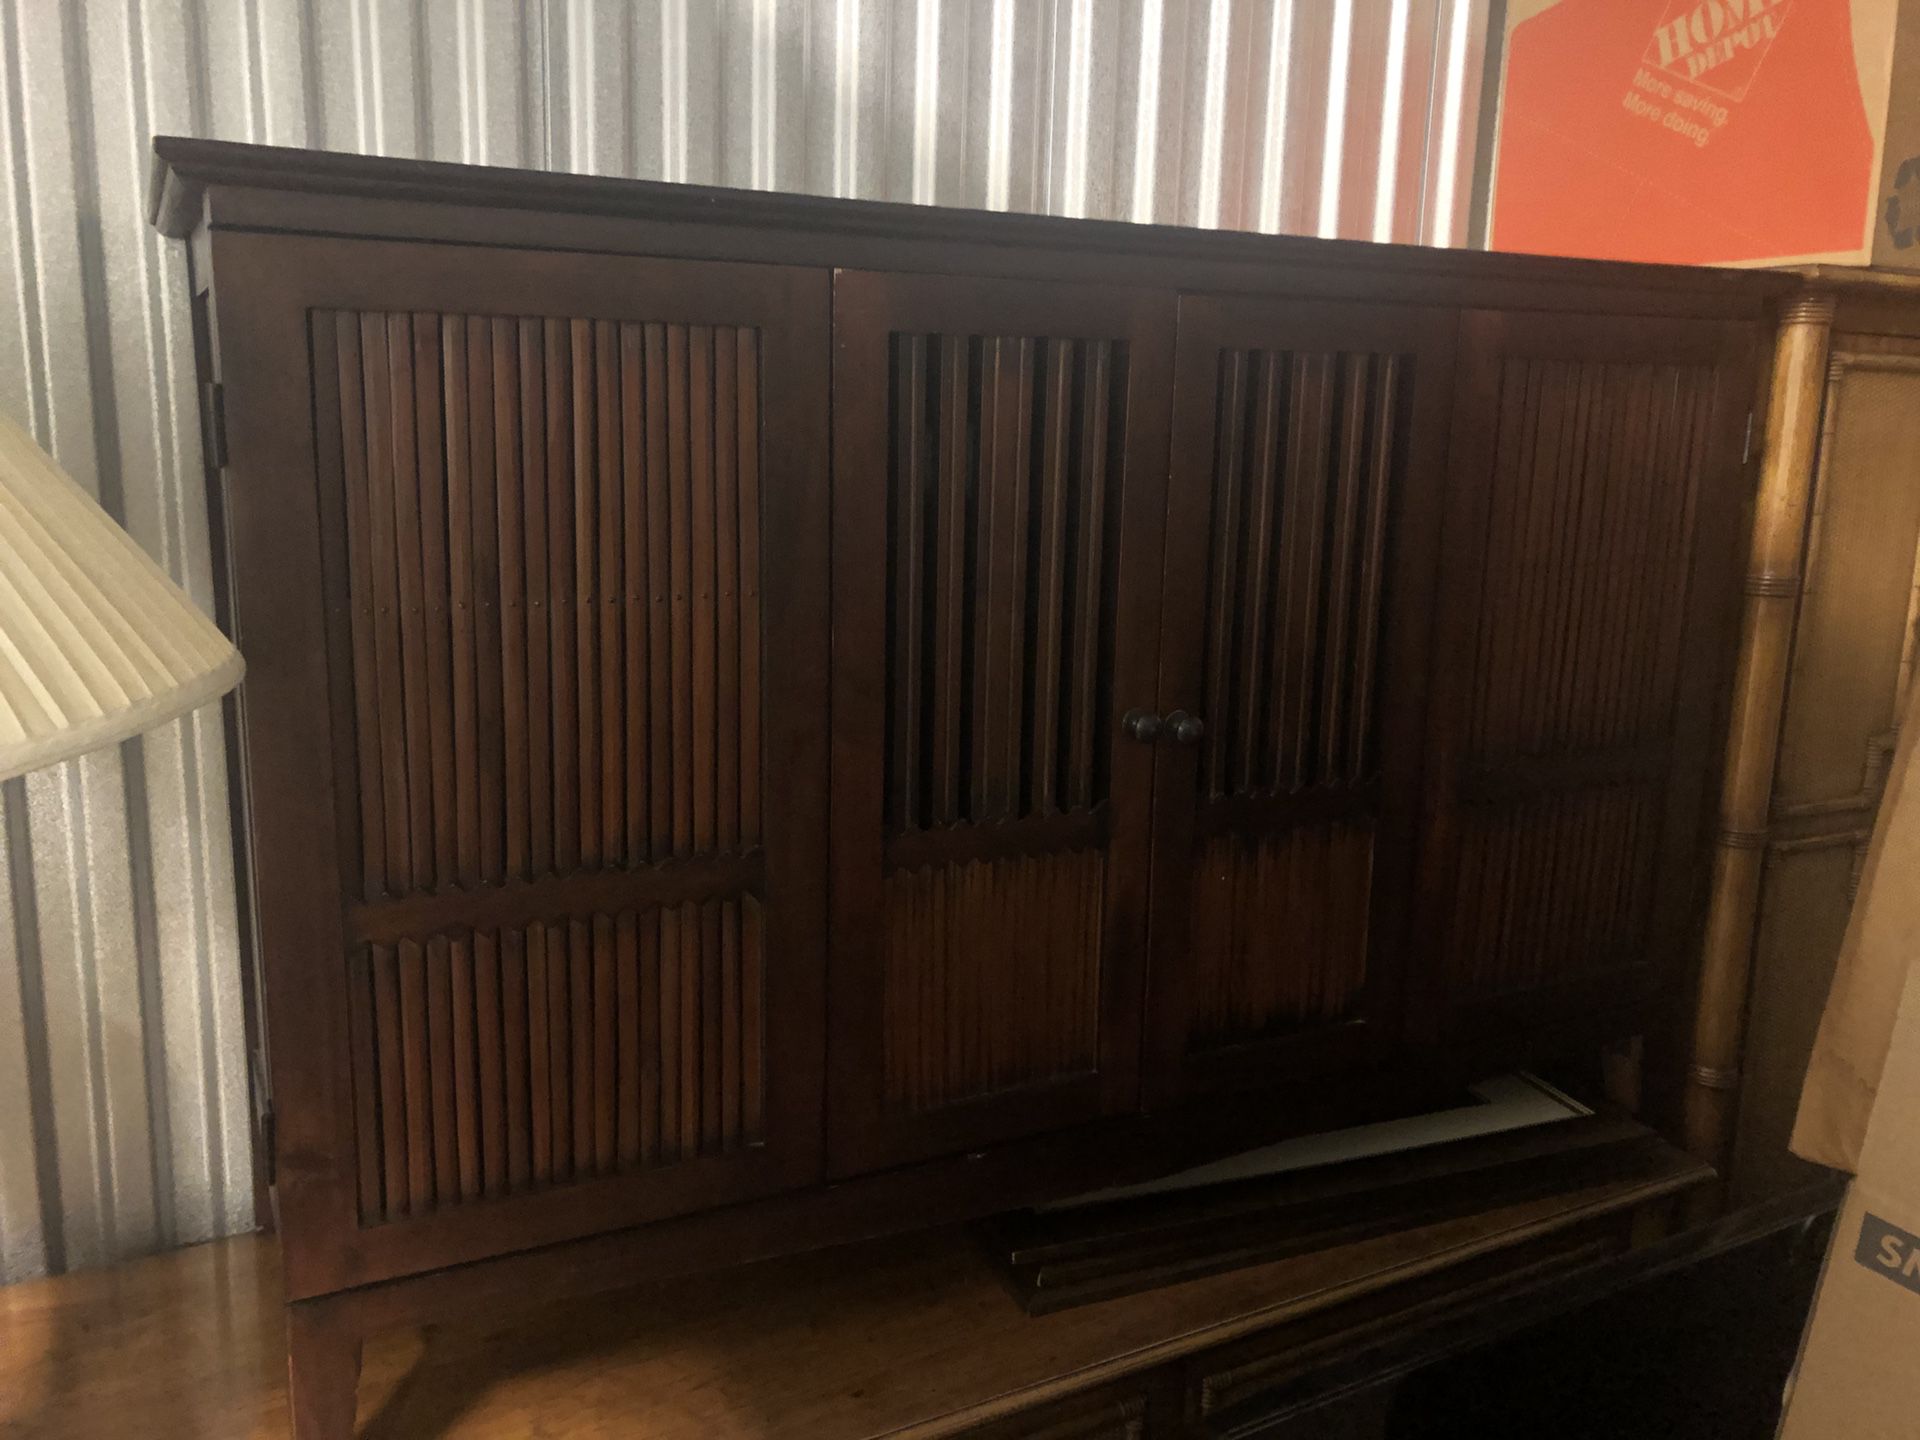 Hardwood TV stand with storage